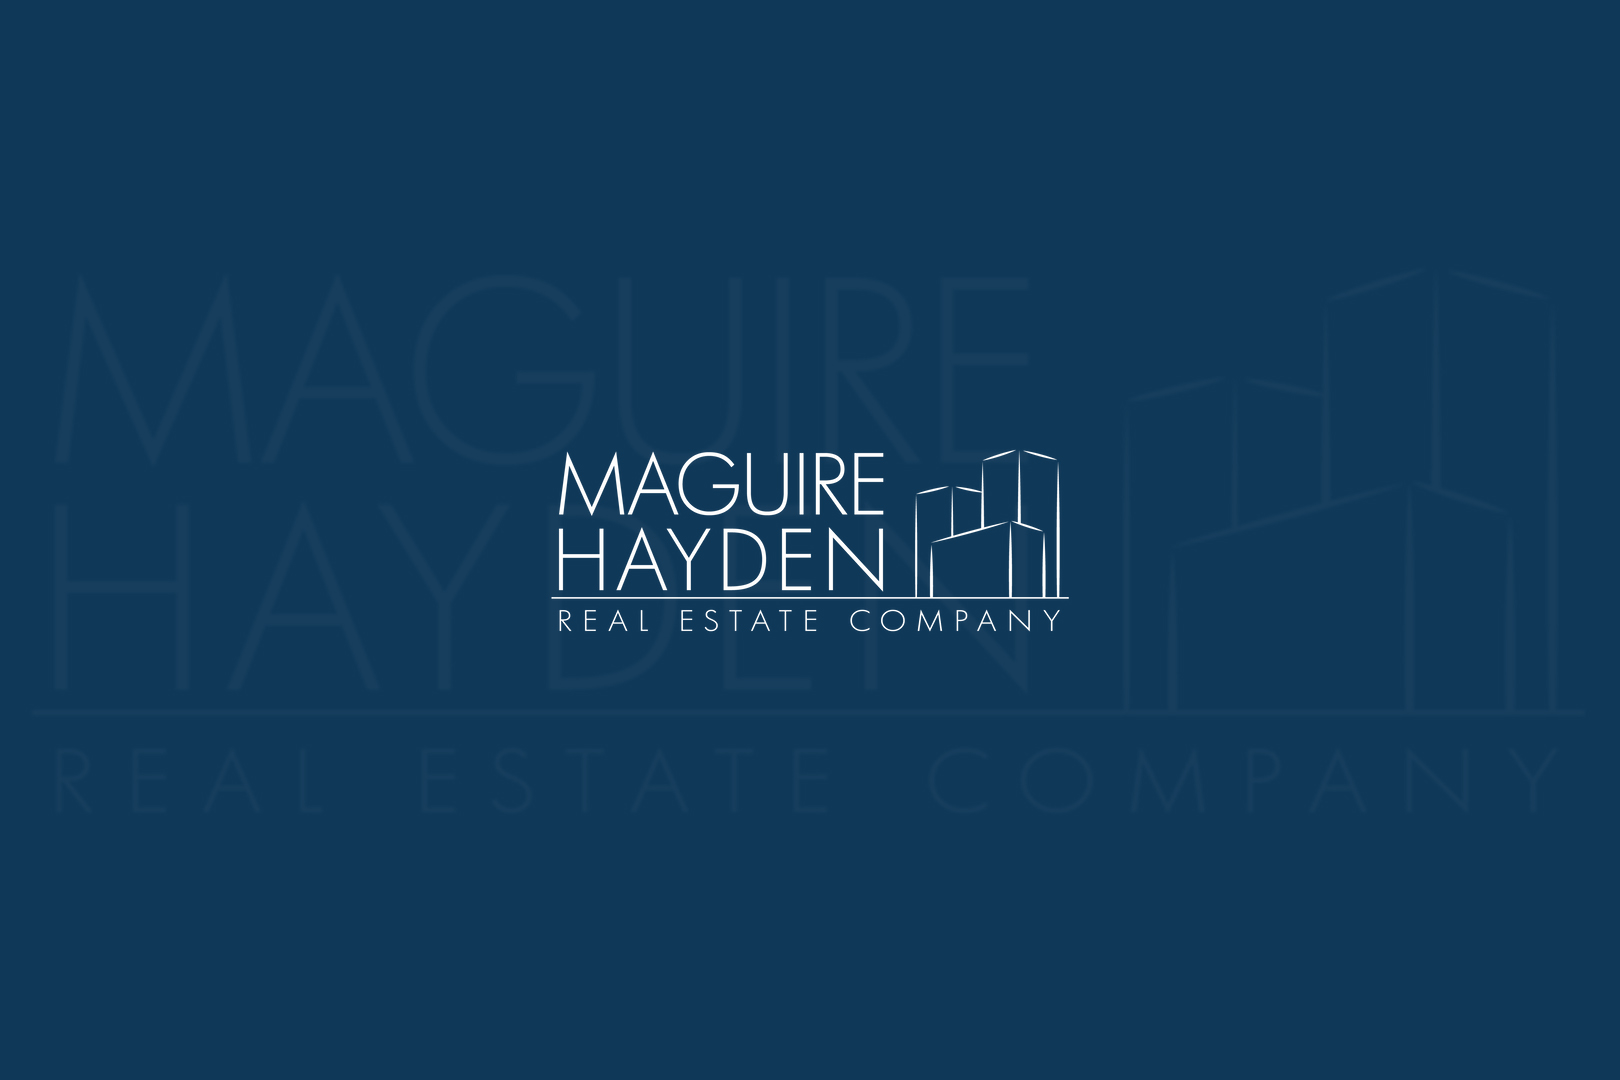 Maguire Hayden buys vacant Wayne lab building from Merck